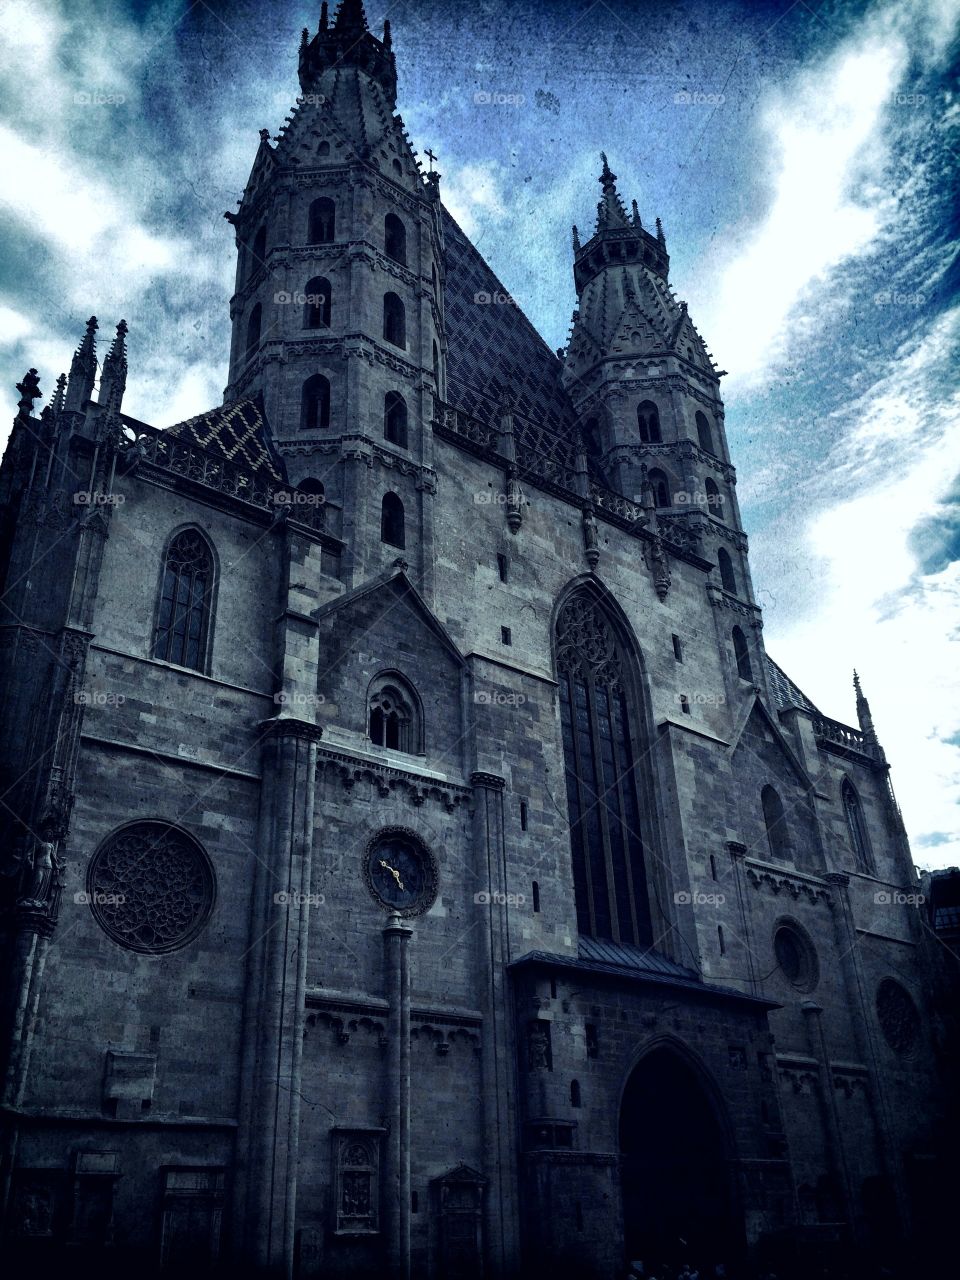 Gothic 